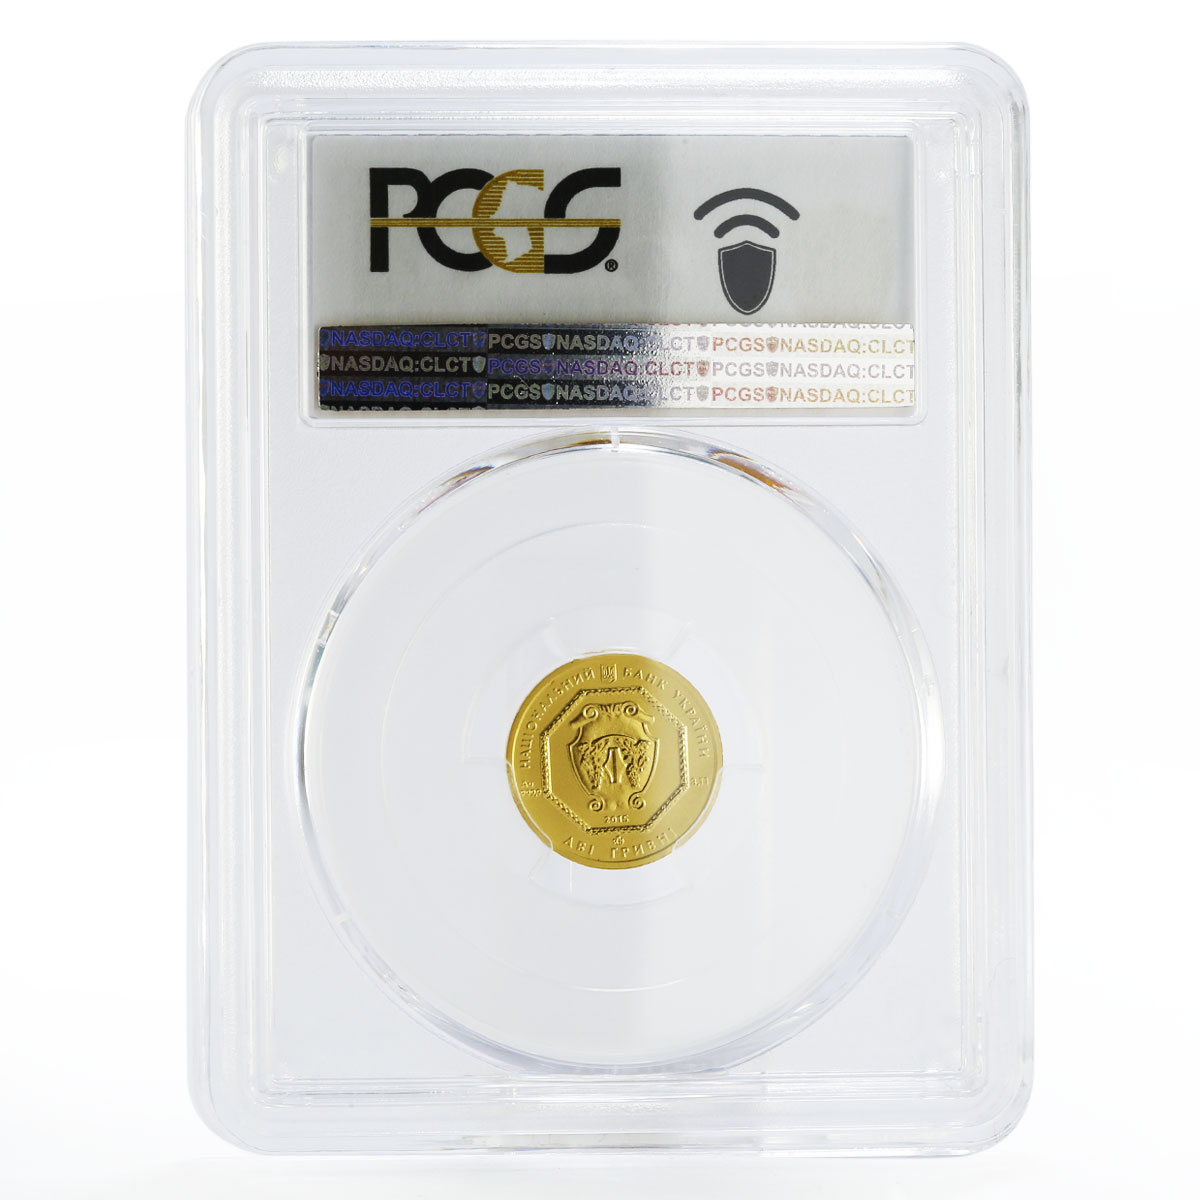 Ukraine 2 hryvnias Archangel Michael MS70 PCGS gold coin 2015